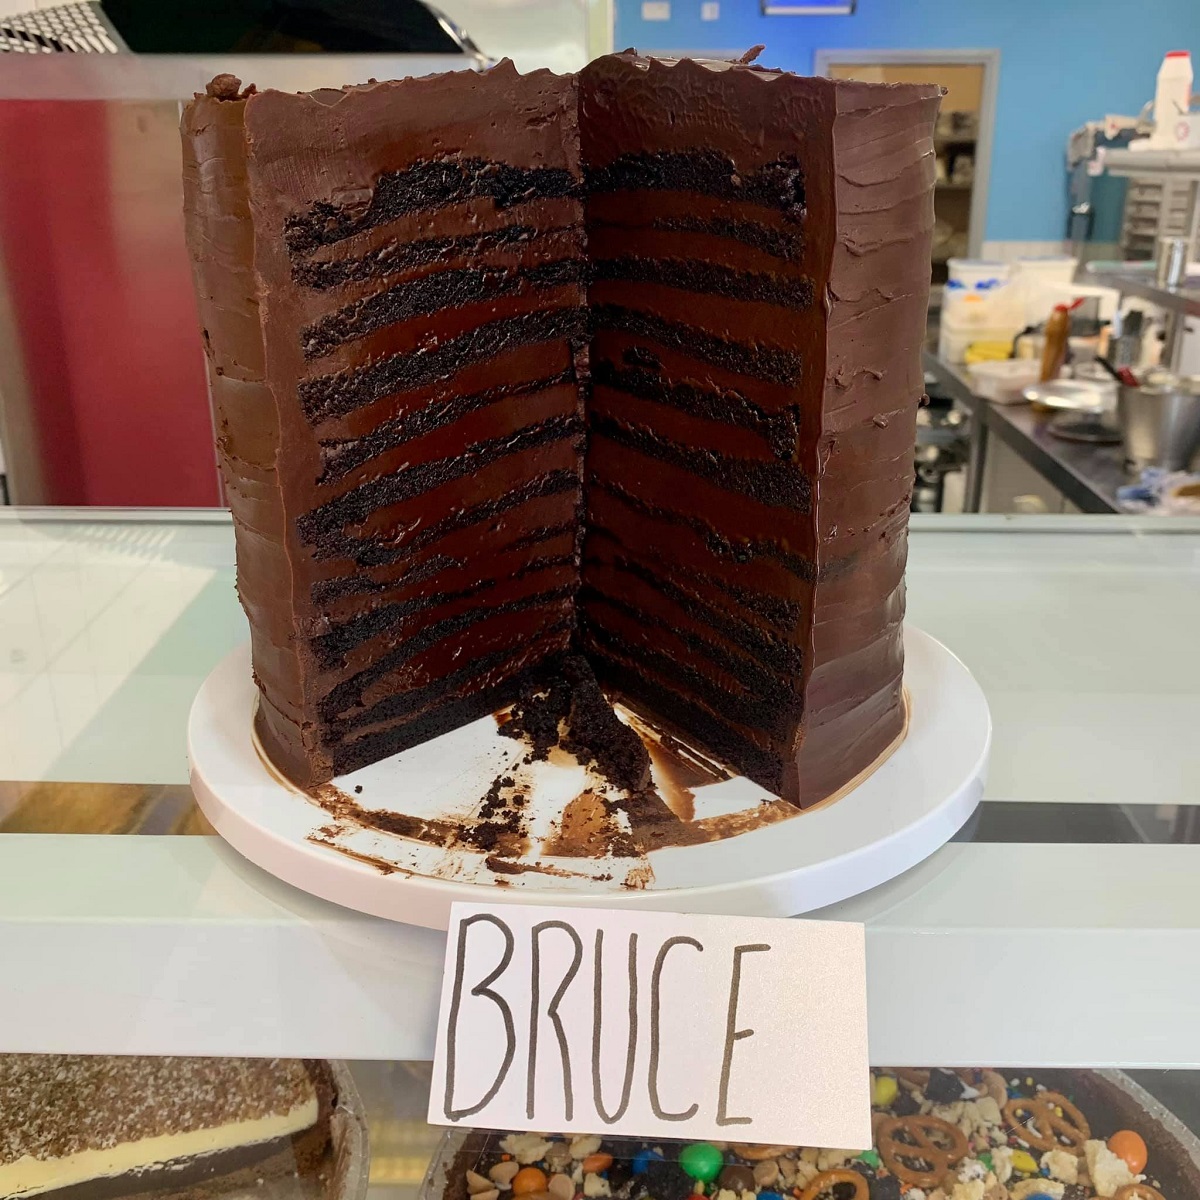 Meet Bruce, Inspired By The Cake Bruce Bogtrotter Eats In Matilda